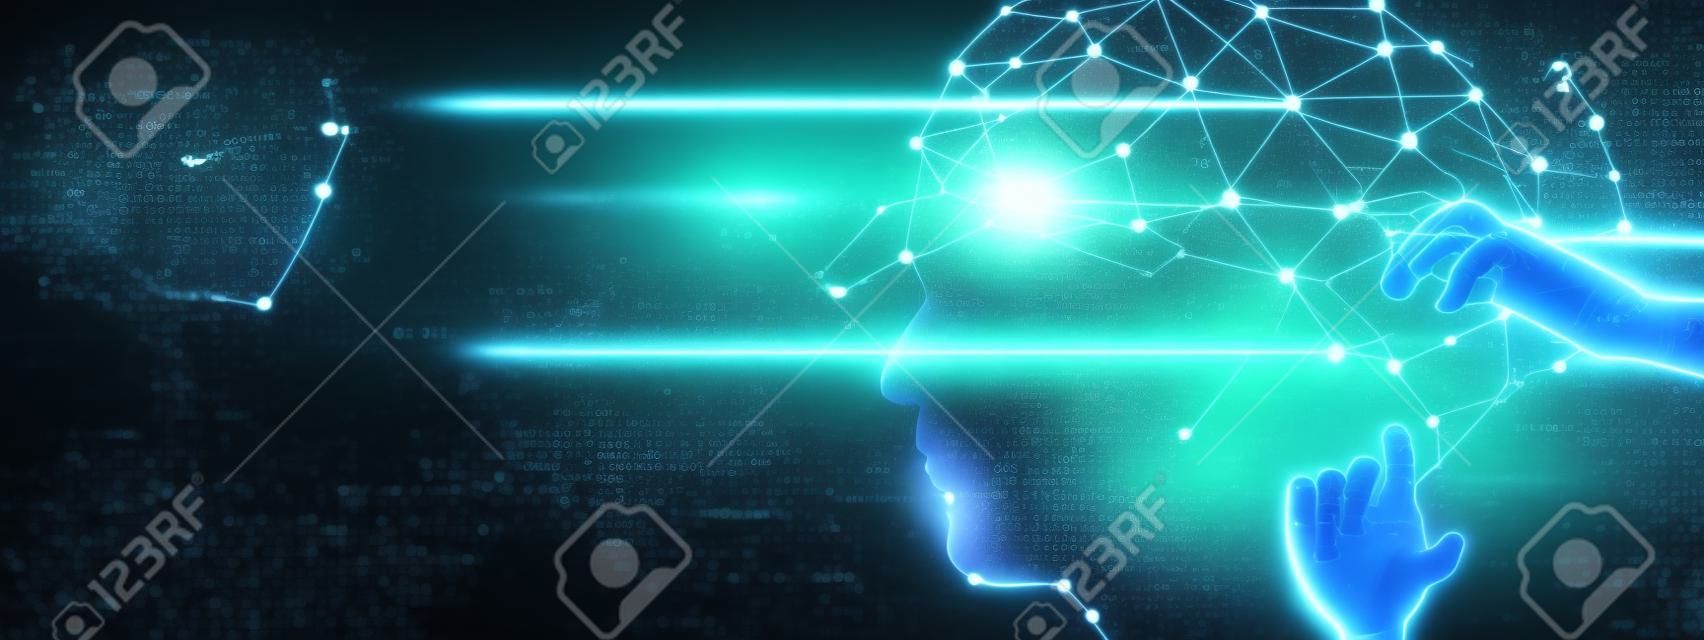 Aprendizaje automático. Mano de robot tocando datos binarios. Inteligencia artificial futurista (IA). Aprendizaje profundo. Representación del cerebro. Algoritmo e innovador. Red neuronal. Visualización de big data.